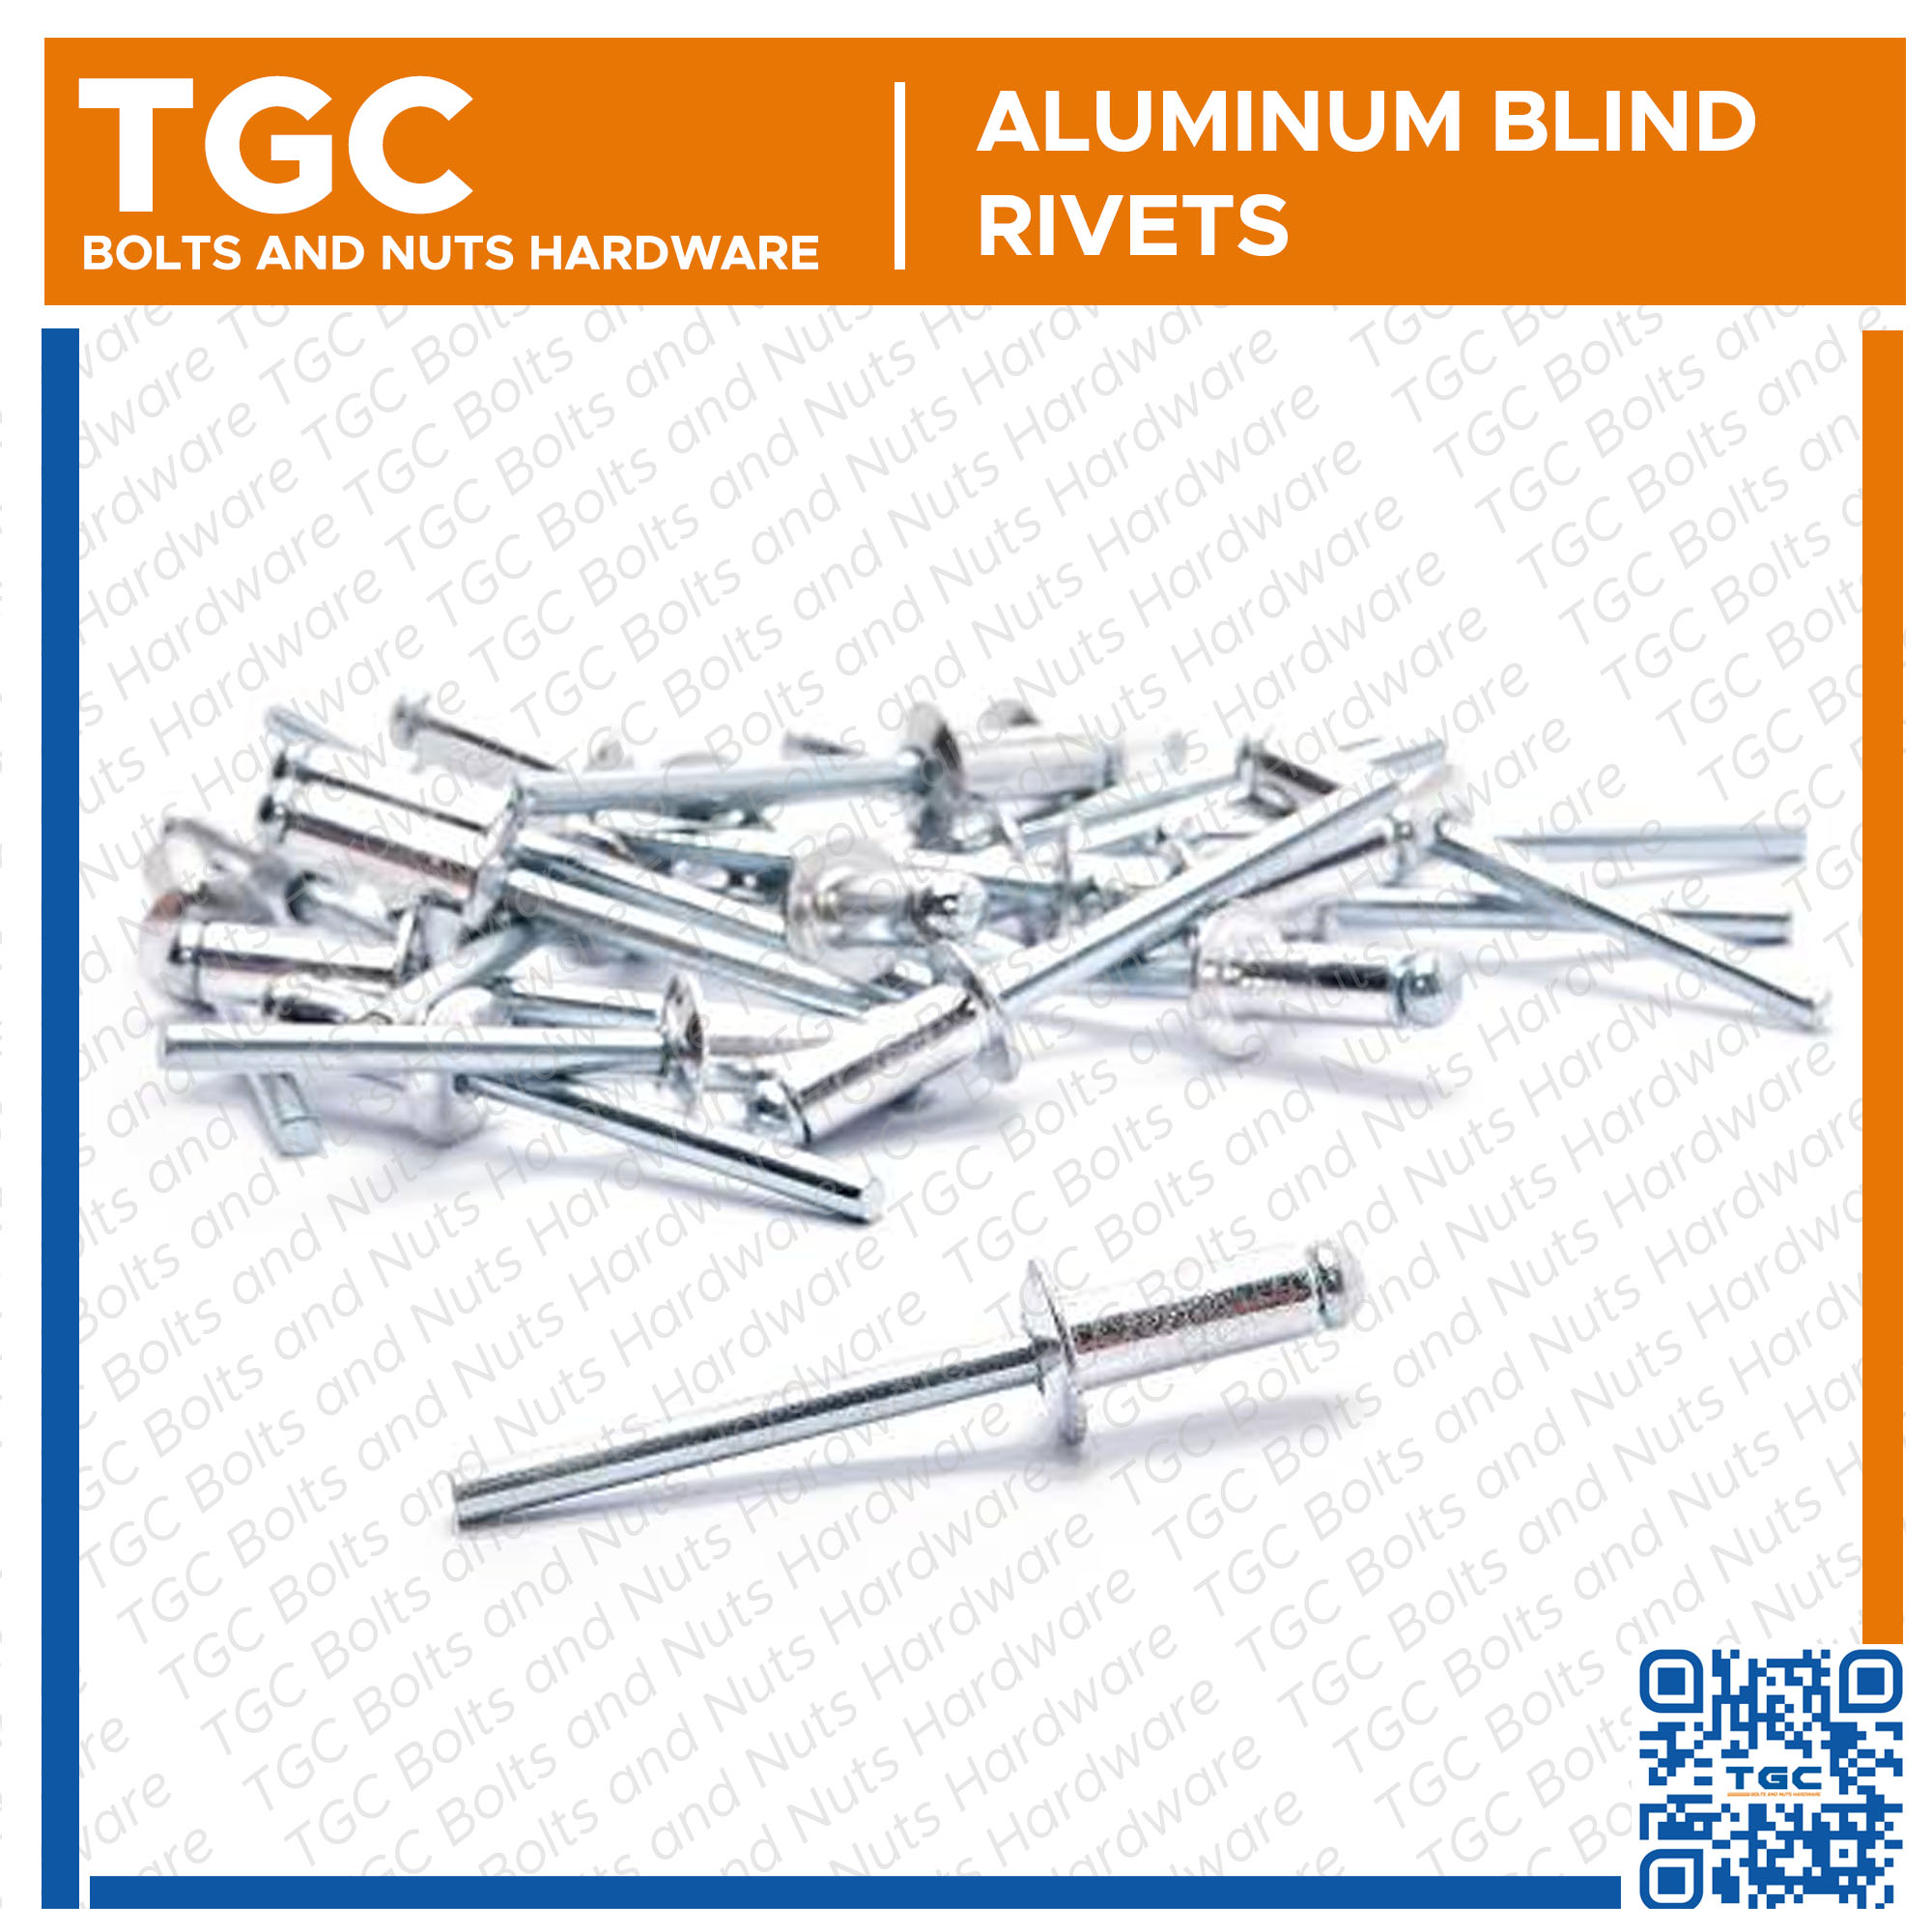 500 PCS Aluminum Blind Rivets 1/8 inches up to 3/16 or Pop Rivets TGC